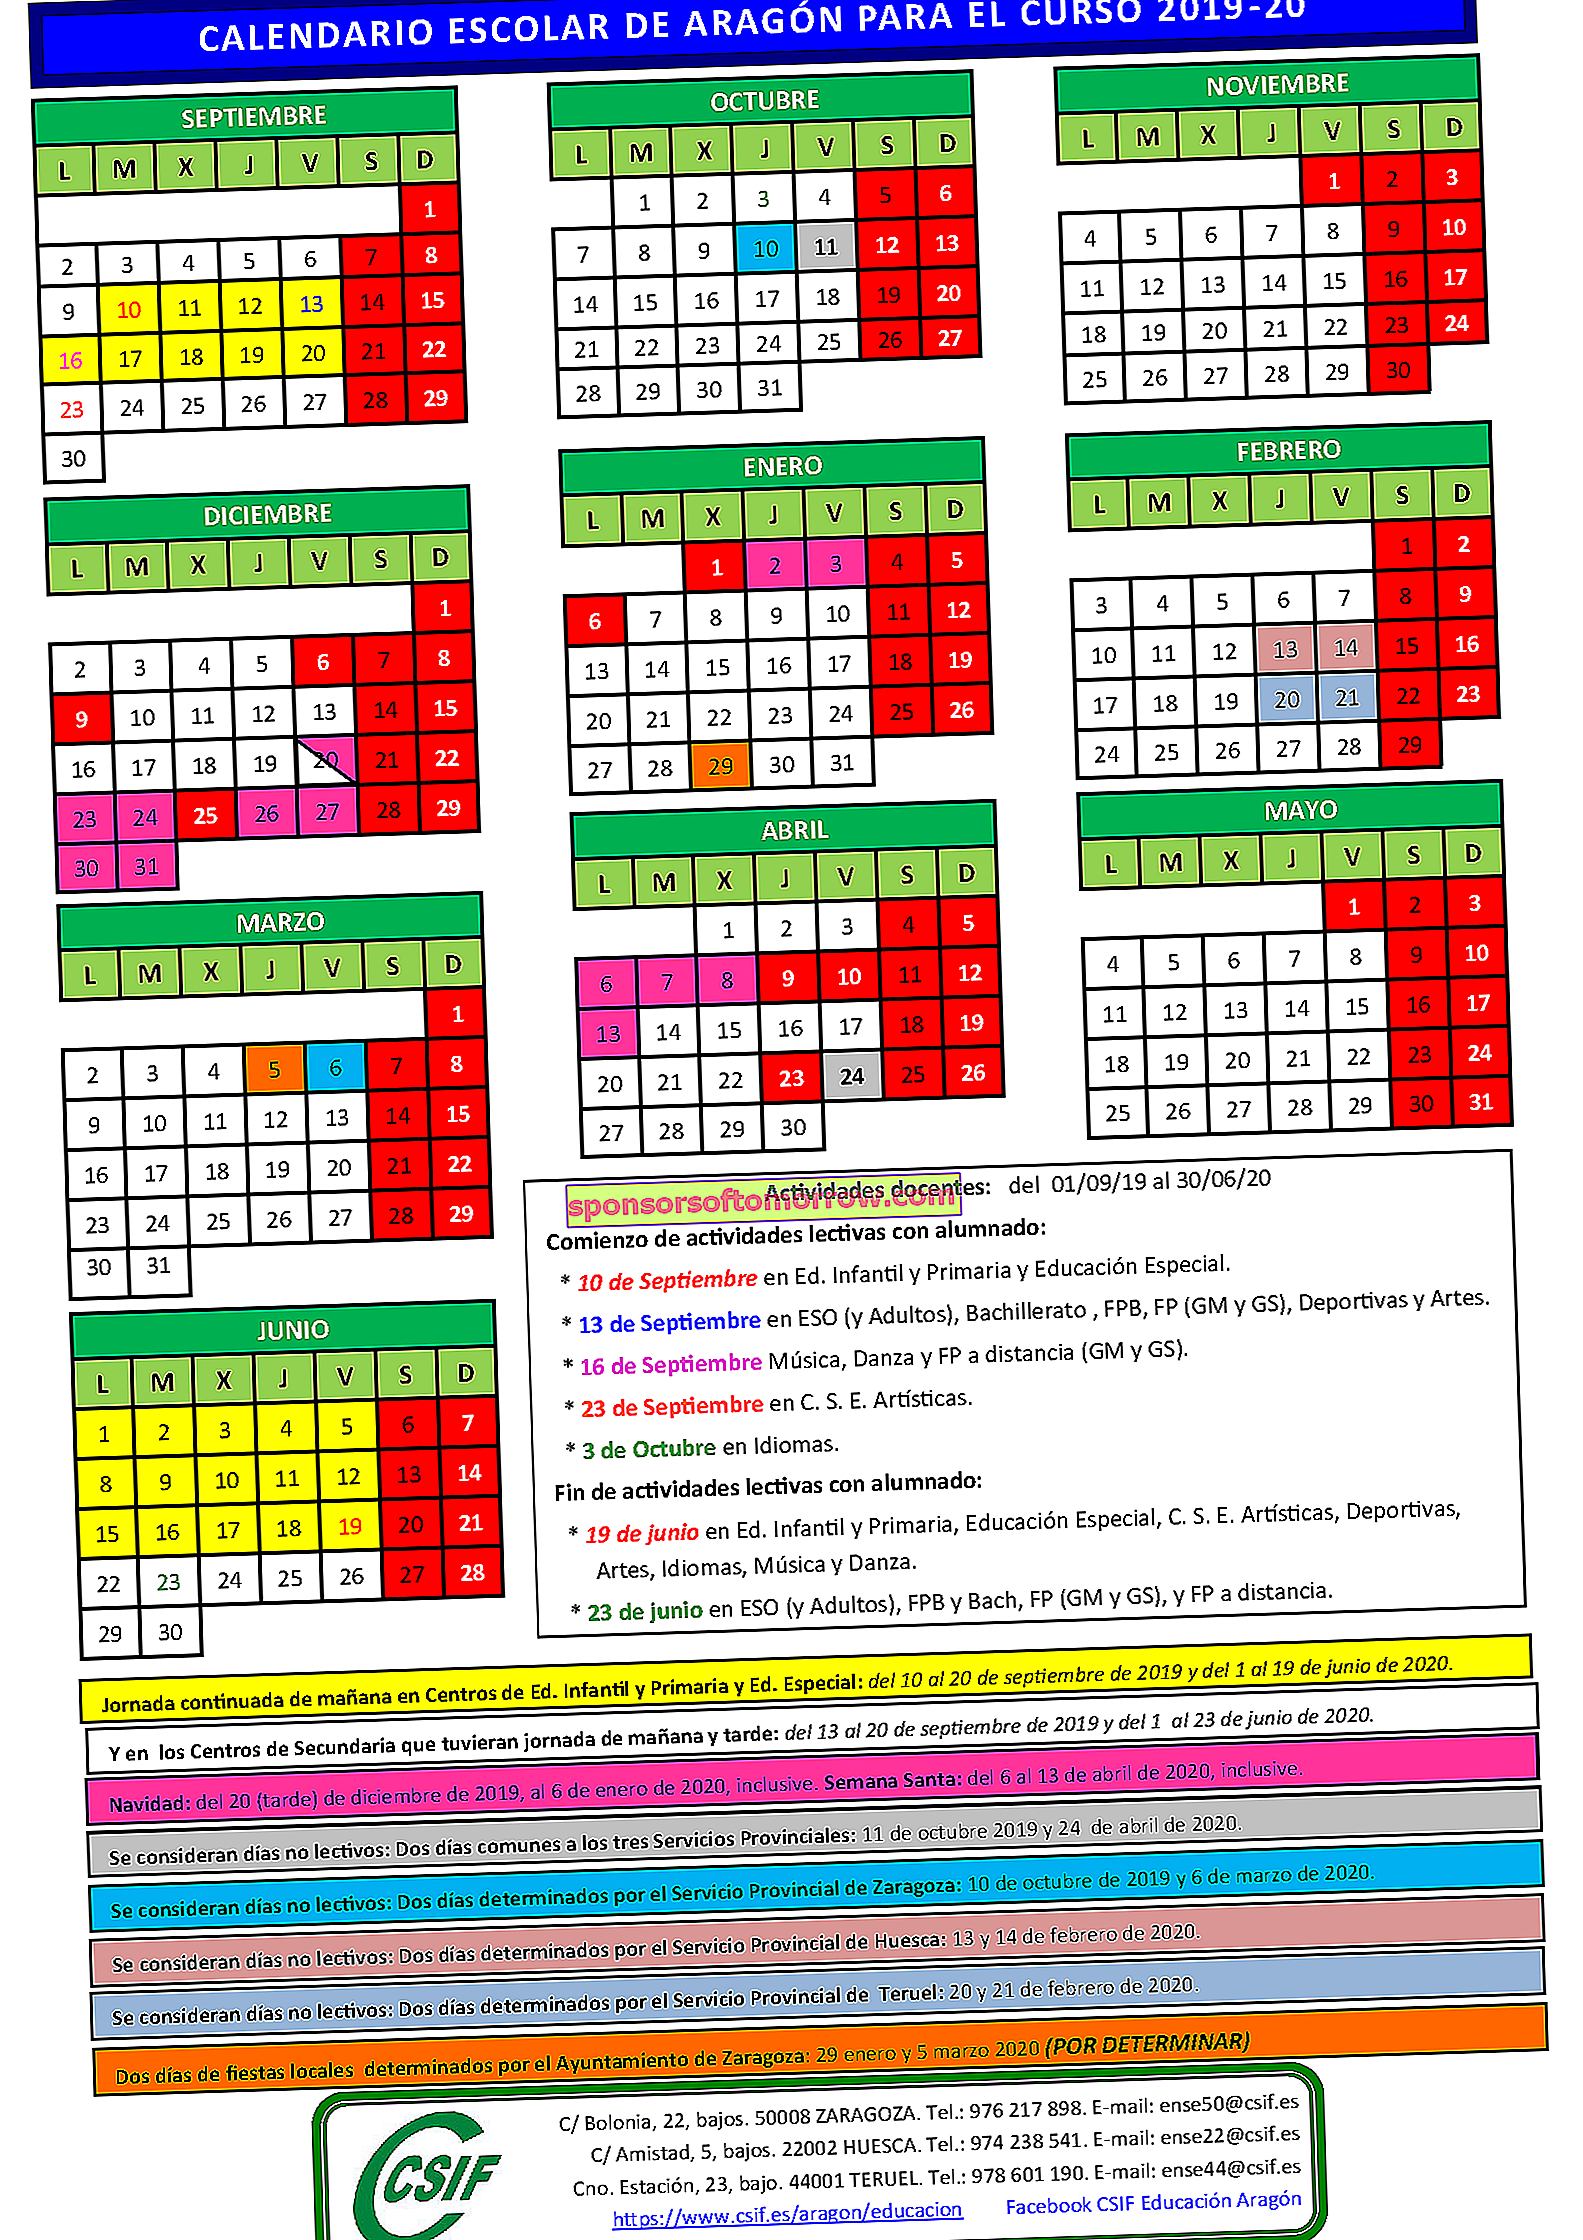 Kalender sekolah aragon 2019